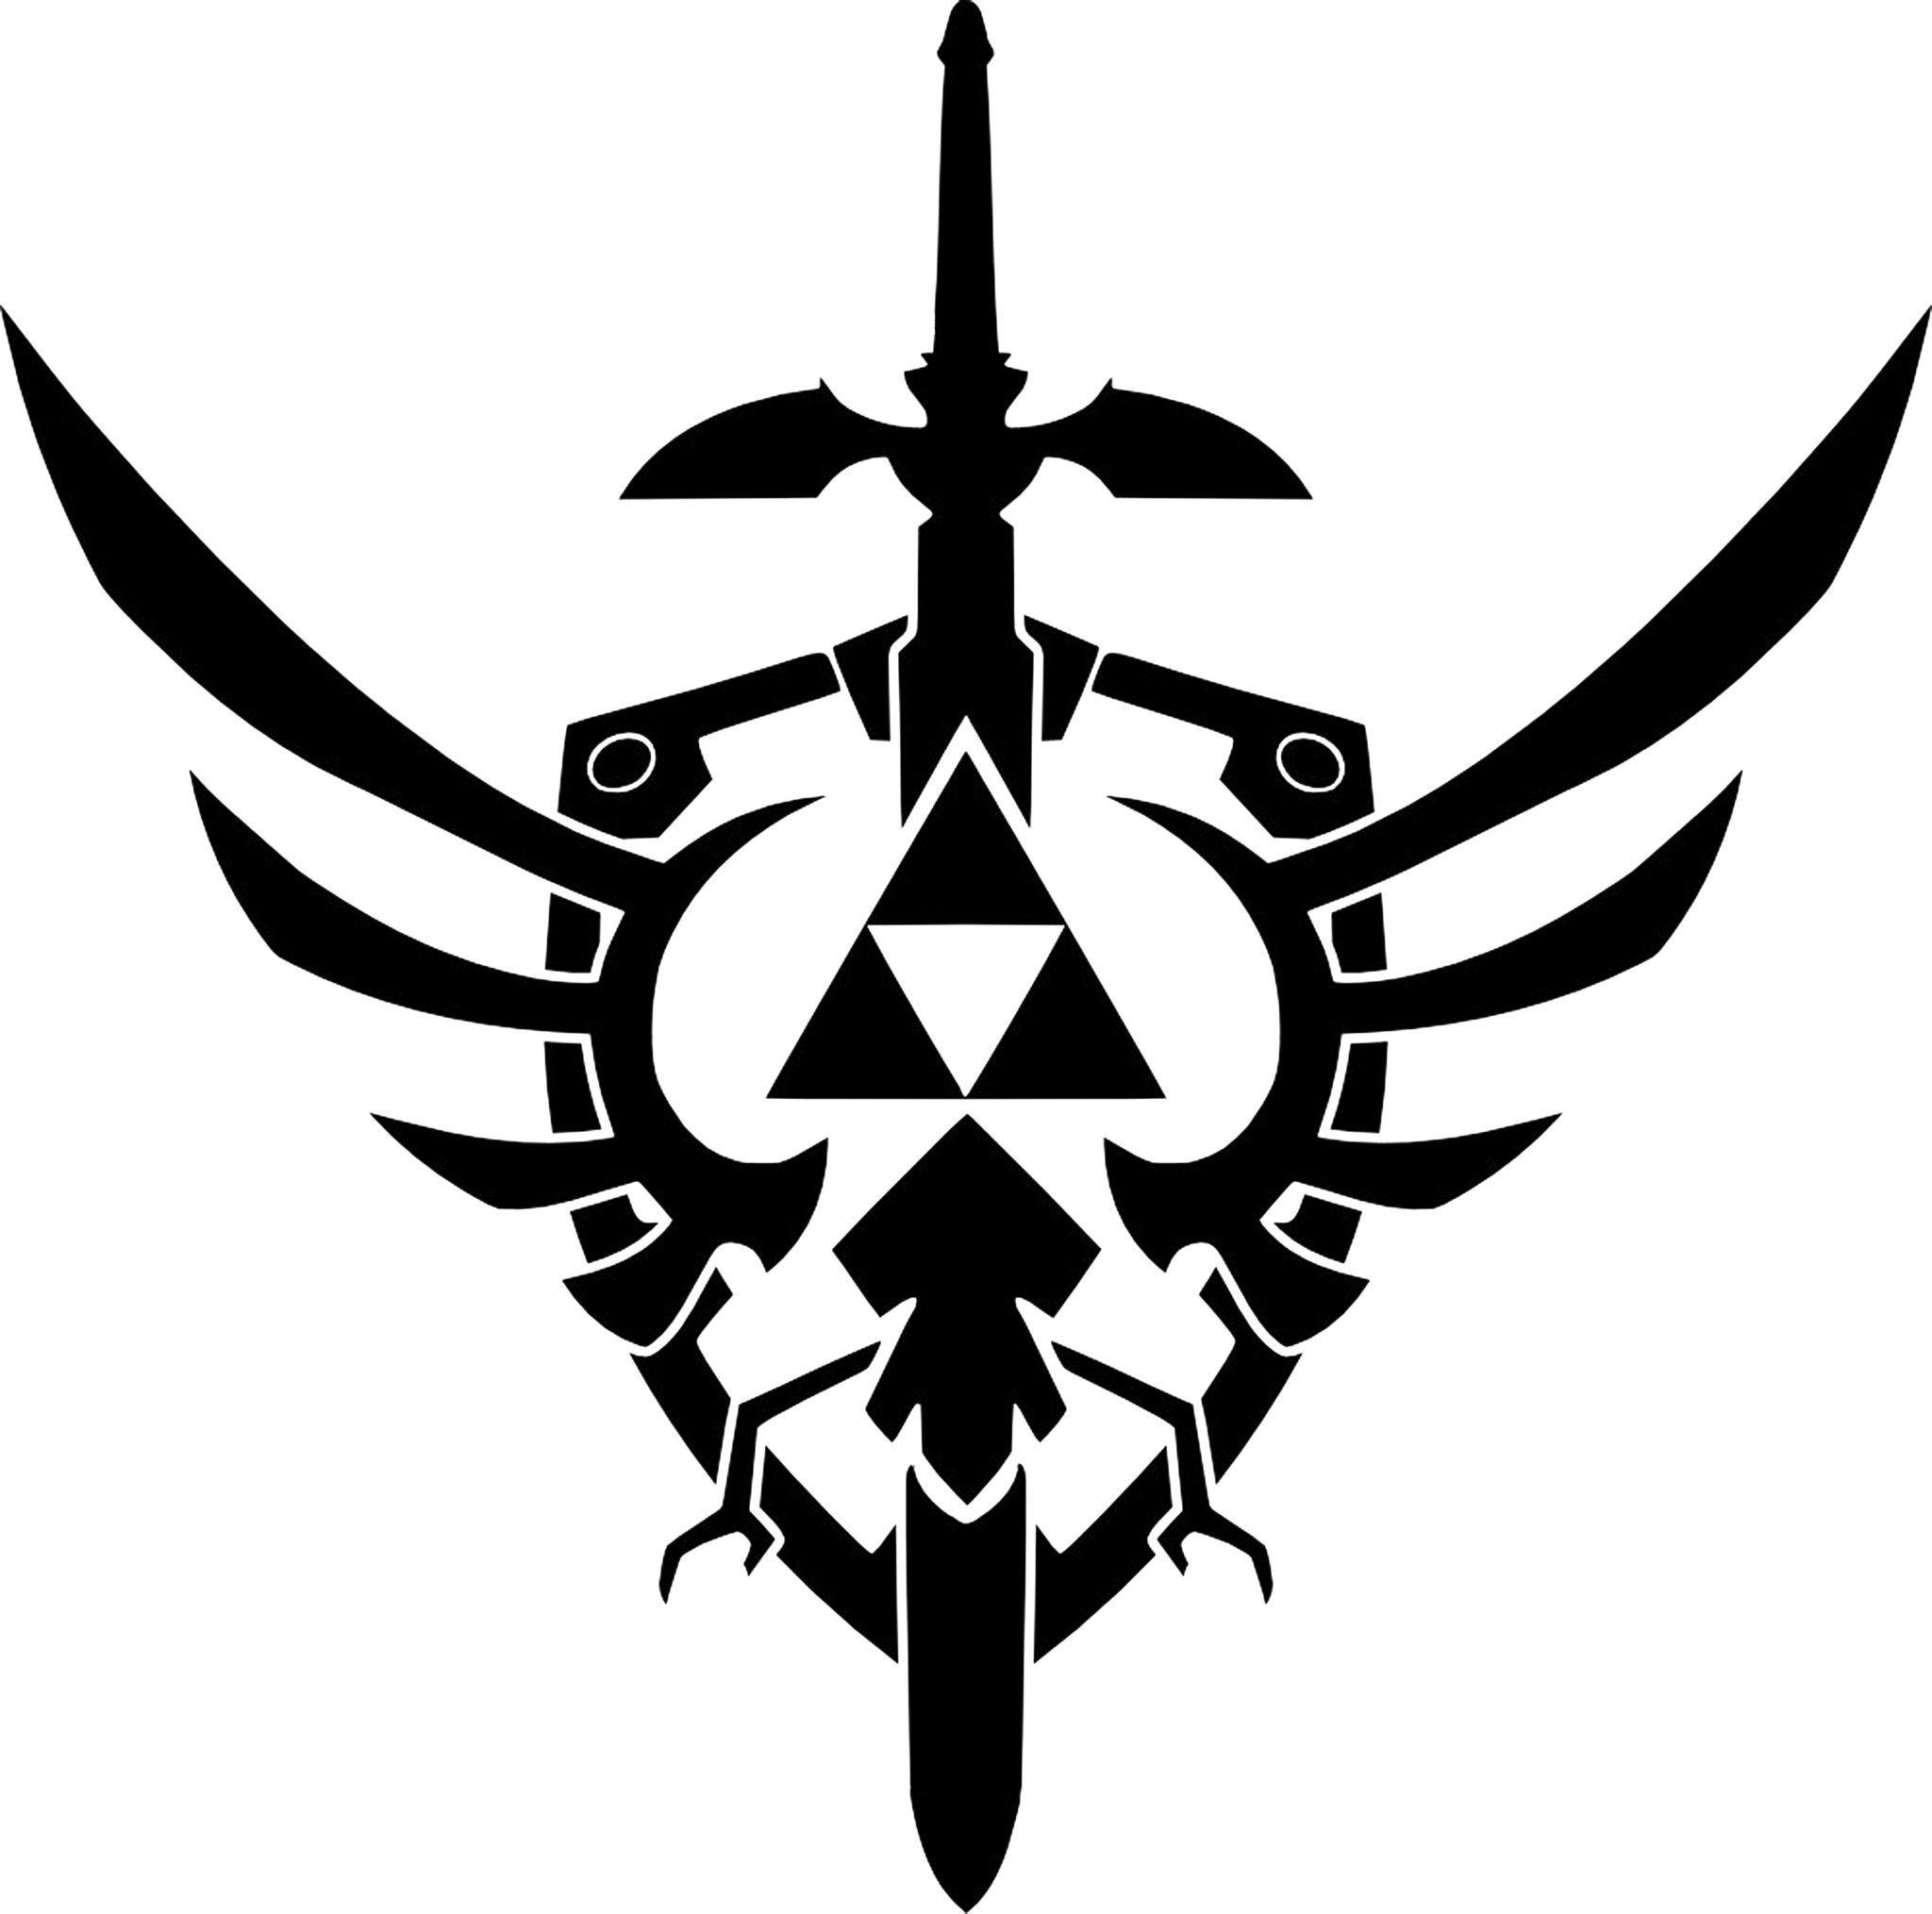 Zelda Triangle Logo - Zelda triforce, master sword and shield. Cool idea for a tattoo